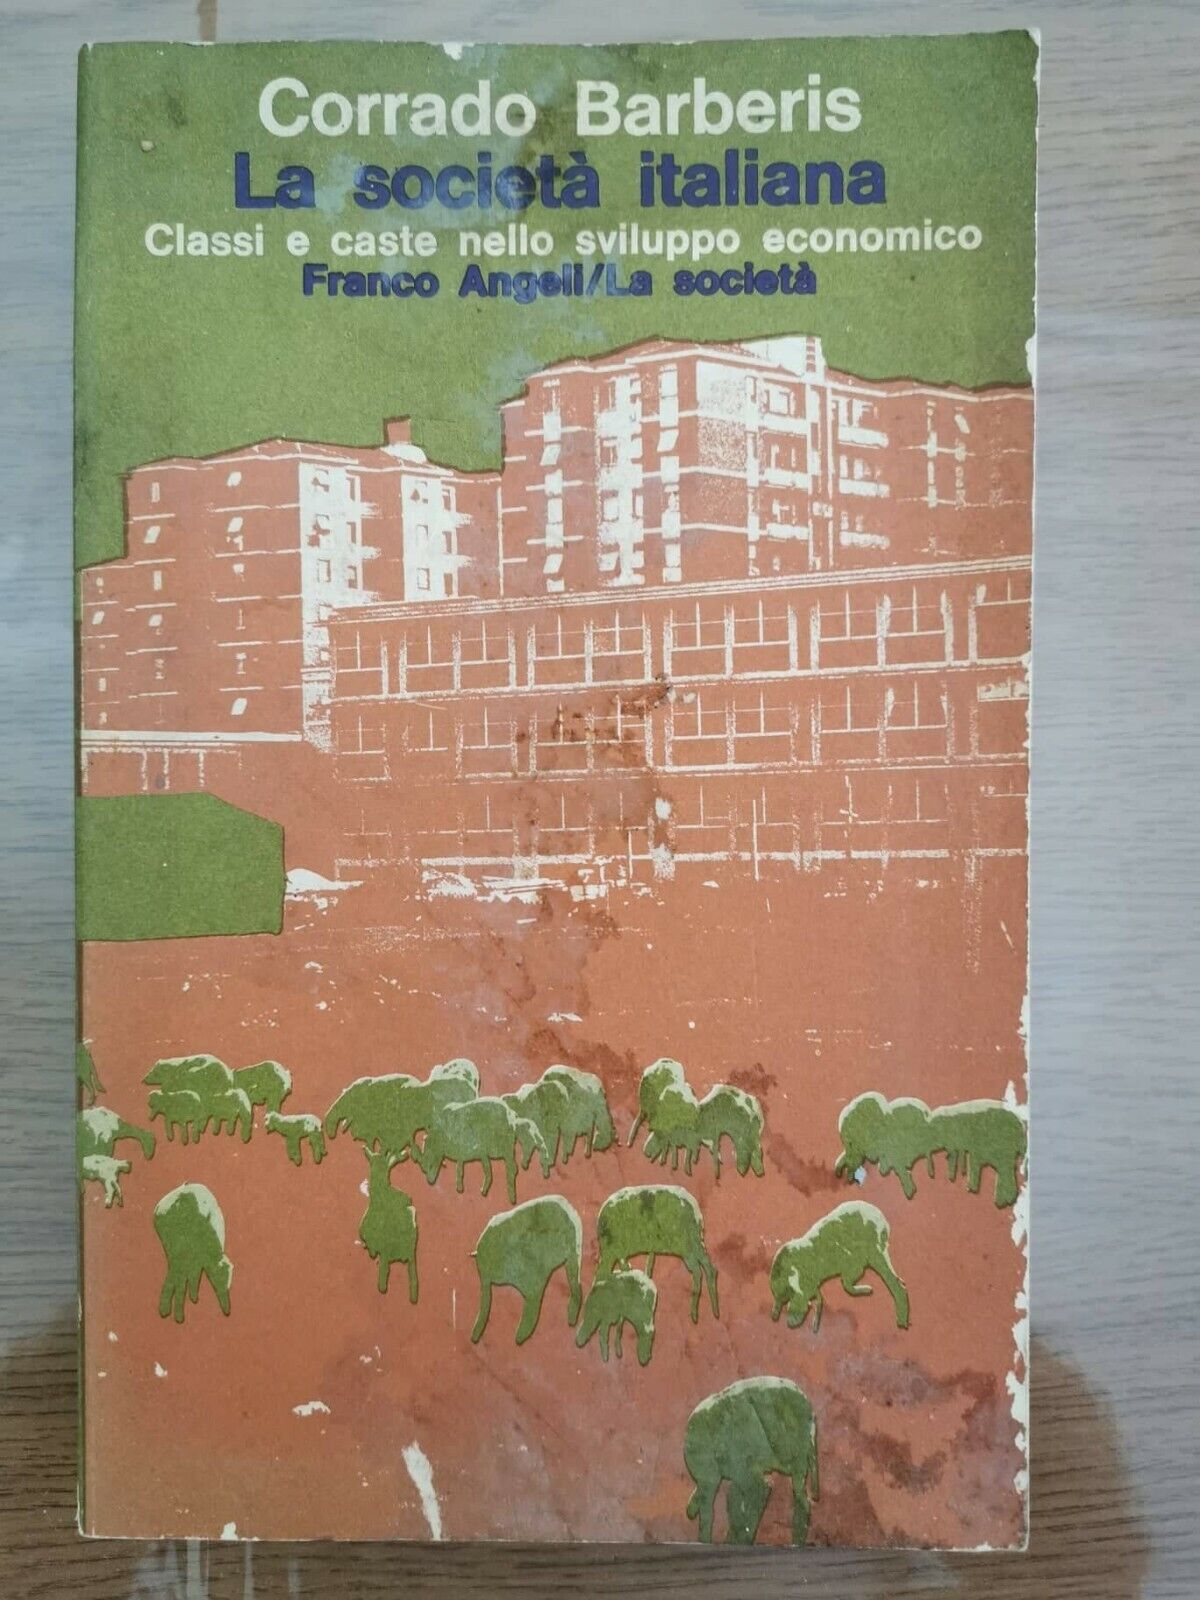 La societ? italiana - C. Barberis - Franco Angeli editore - 1976 - AR